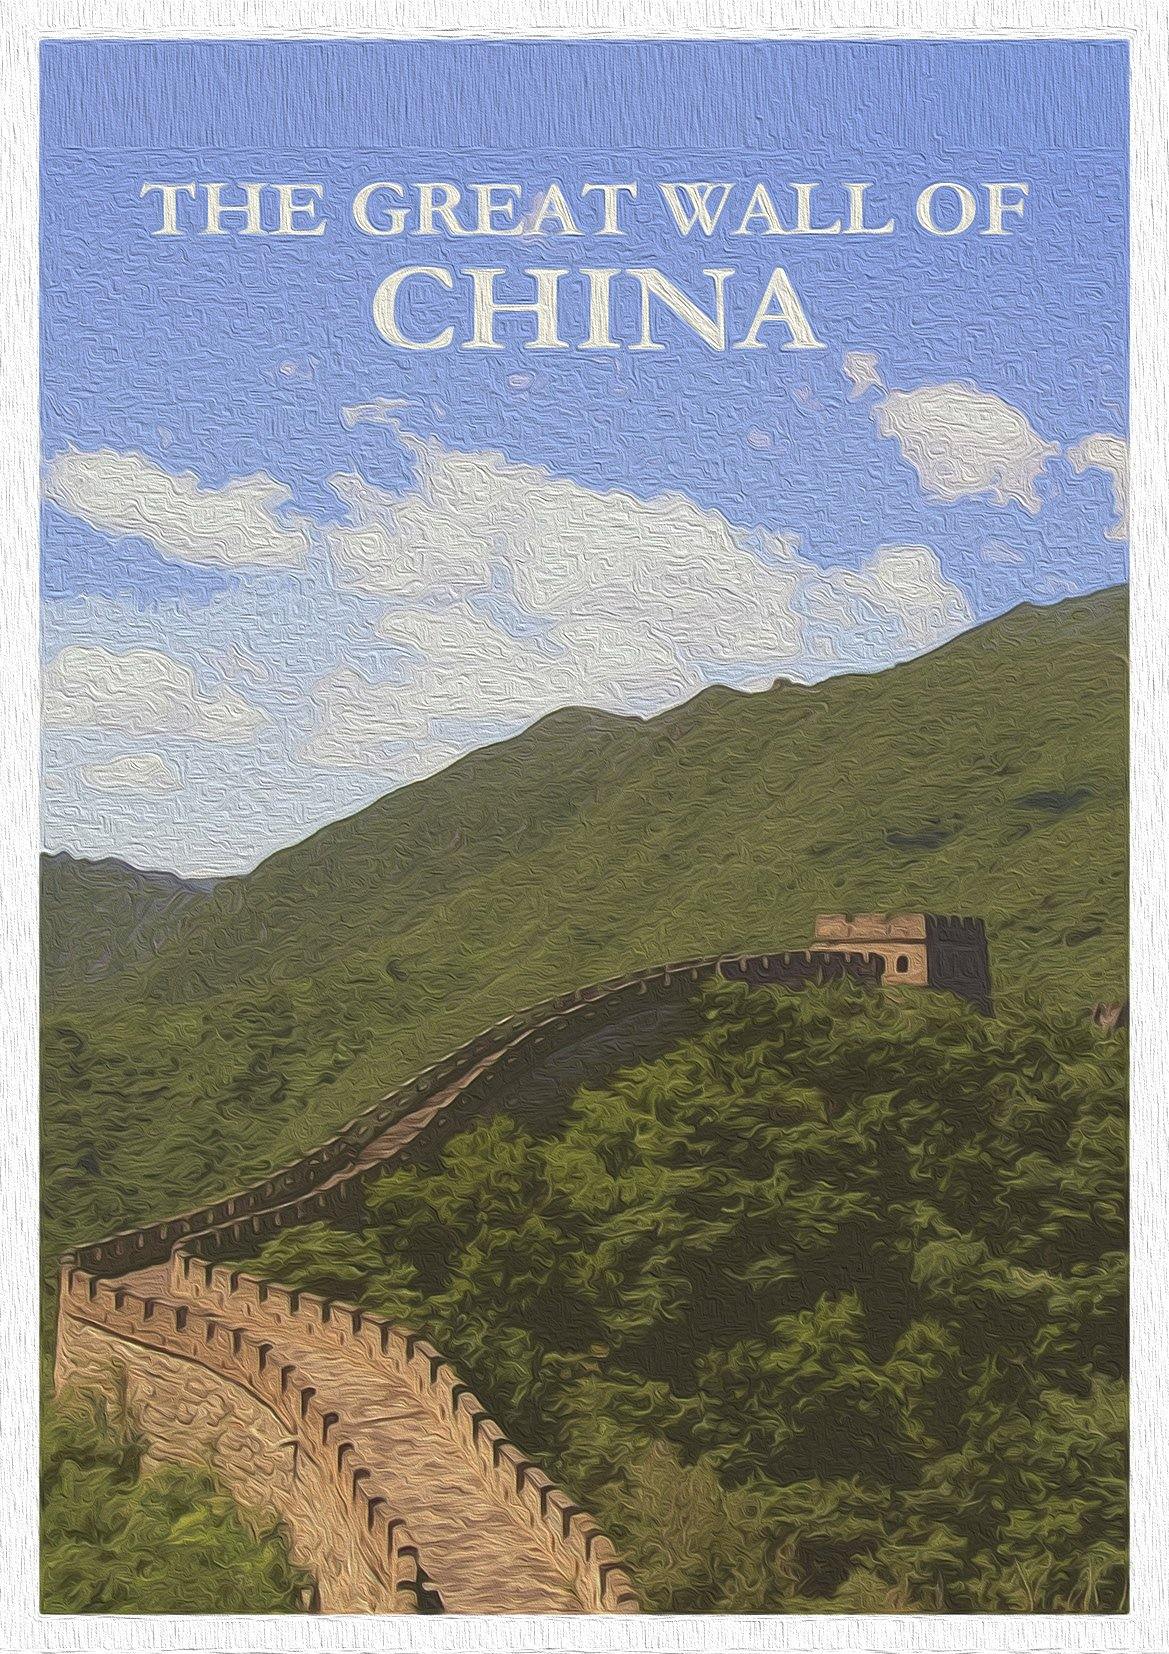 CHINA POSTER: Great Wall of China Print - Pimlico Prints